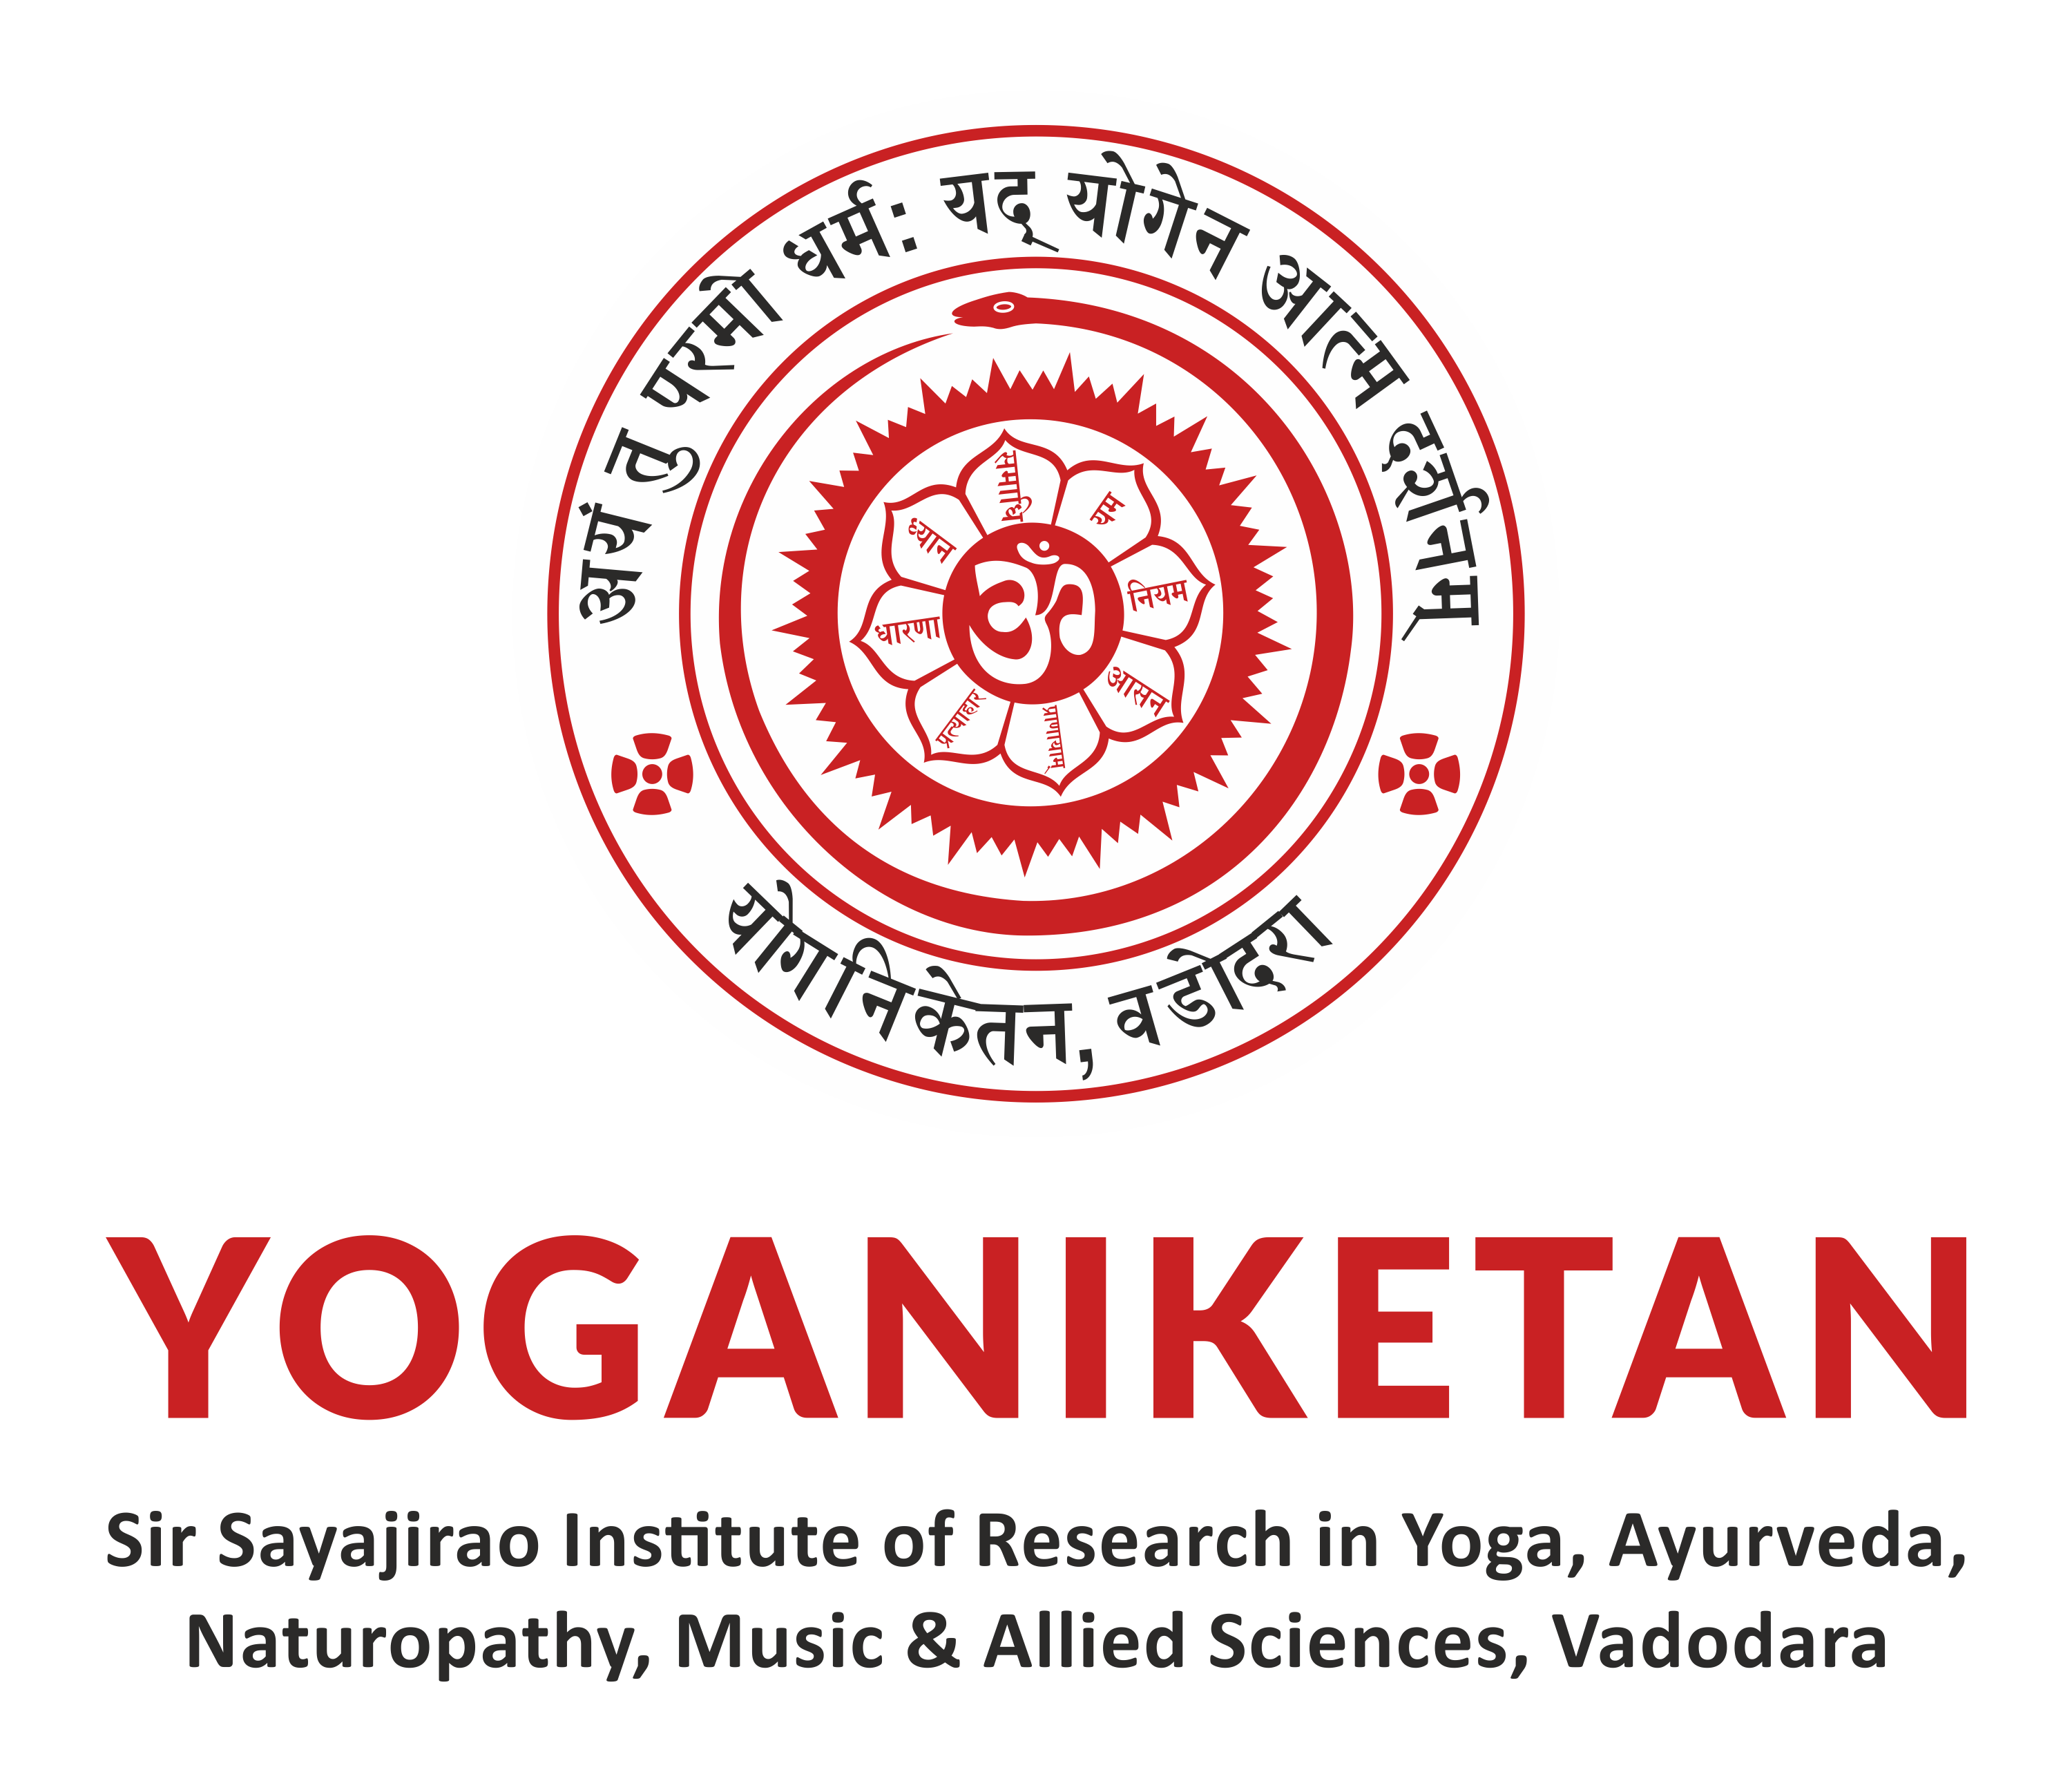 YOGANIKETAN - Sir Sayajirao Institute of Research in Yoga, Ayurveda, Naturopathy, Music & Allied Sciences, Vadodara